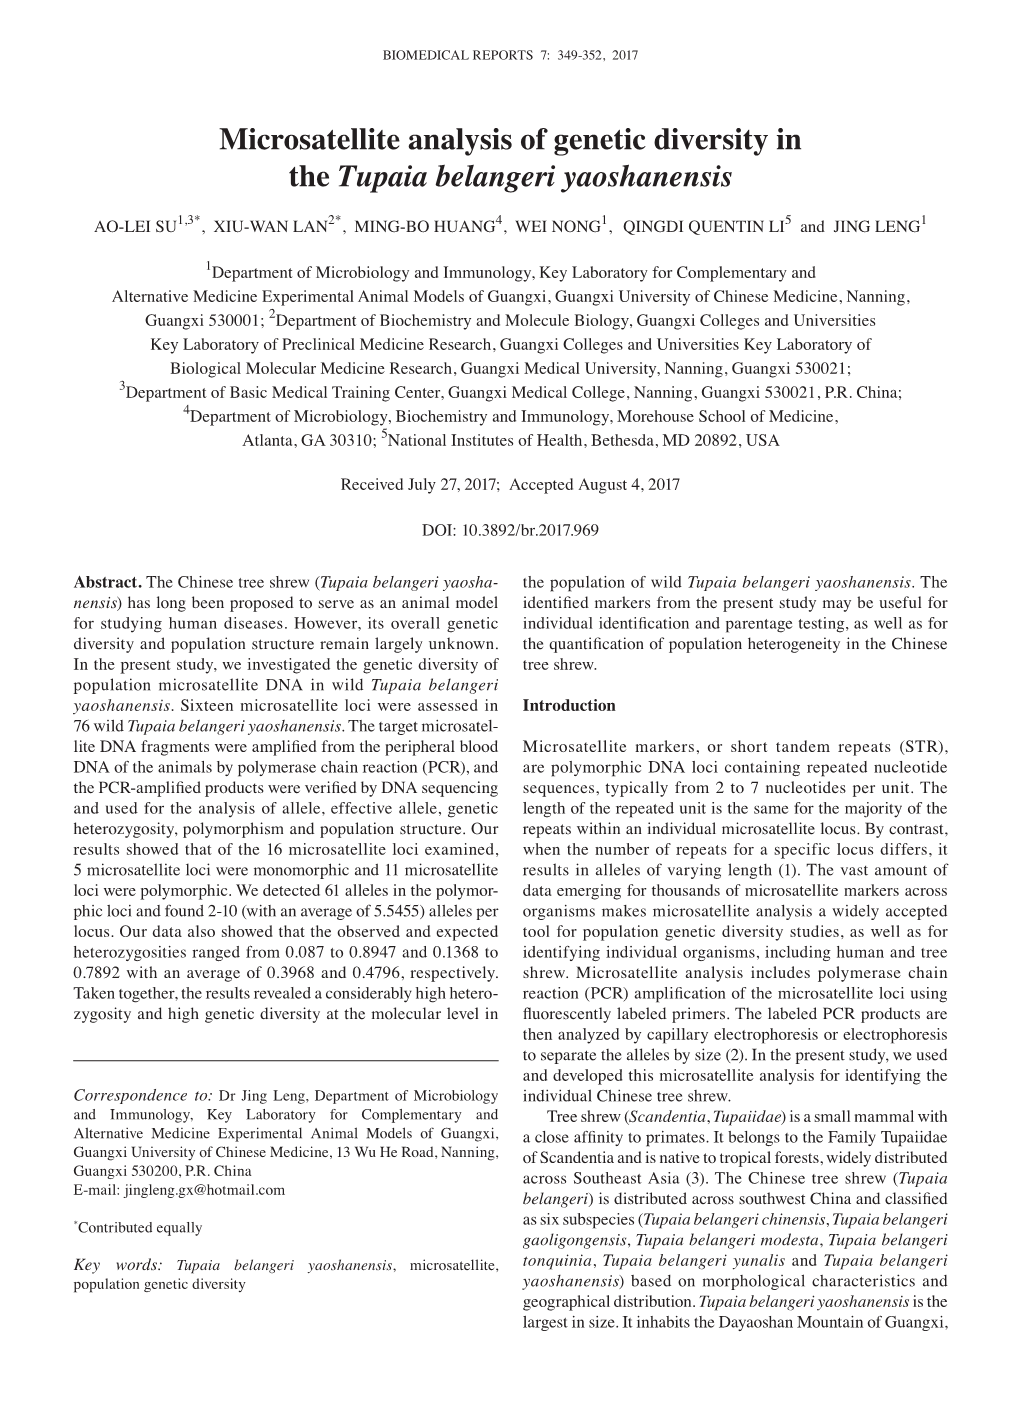 Microsatellite Analysis of Genetic Diversity in the Tupaia Belangeri Yaoshanensis